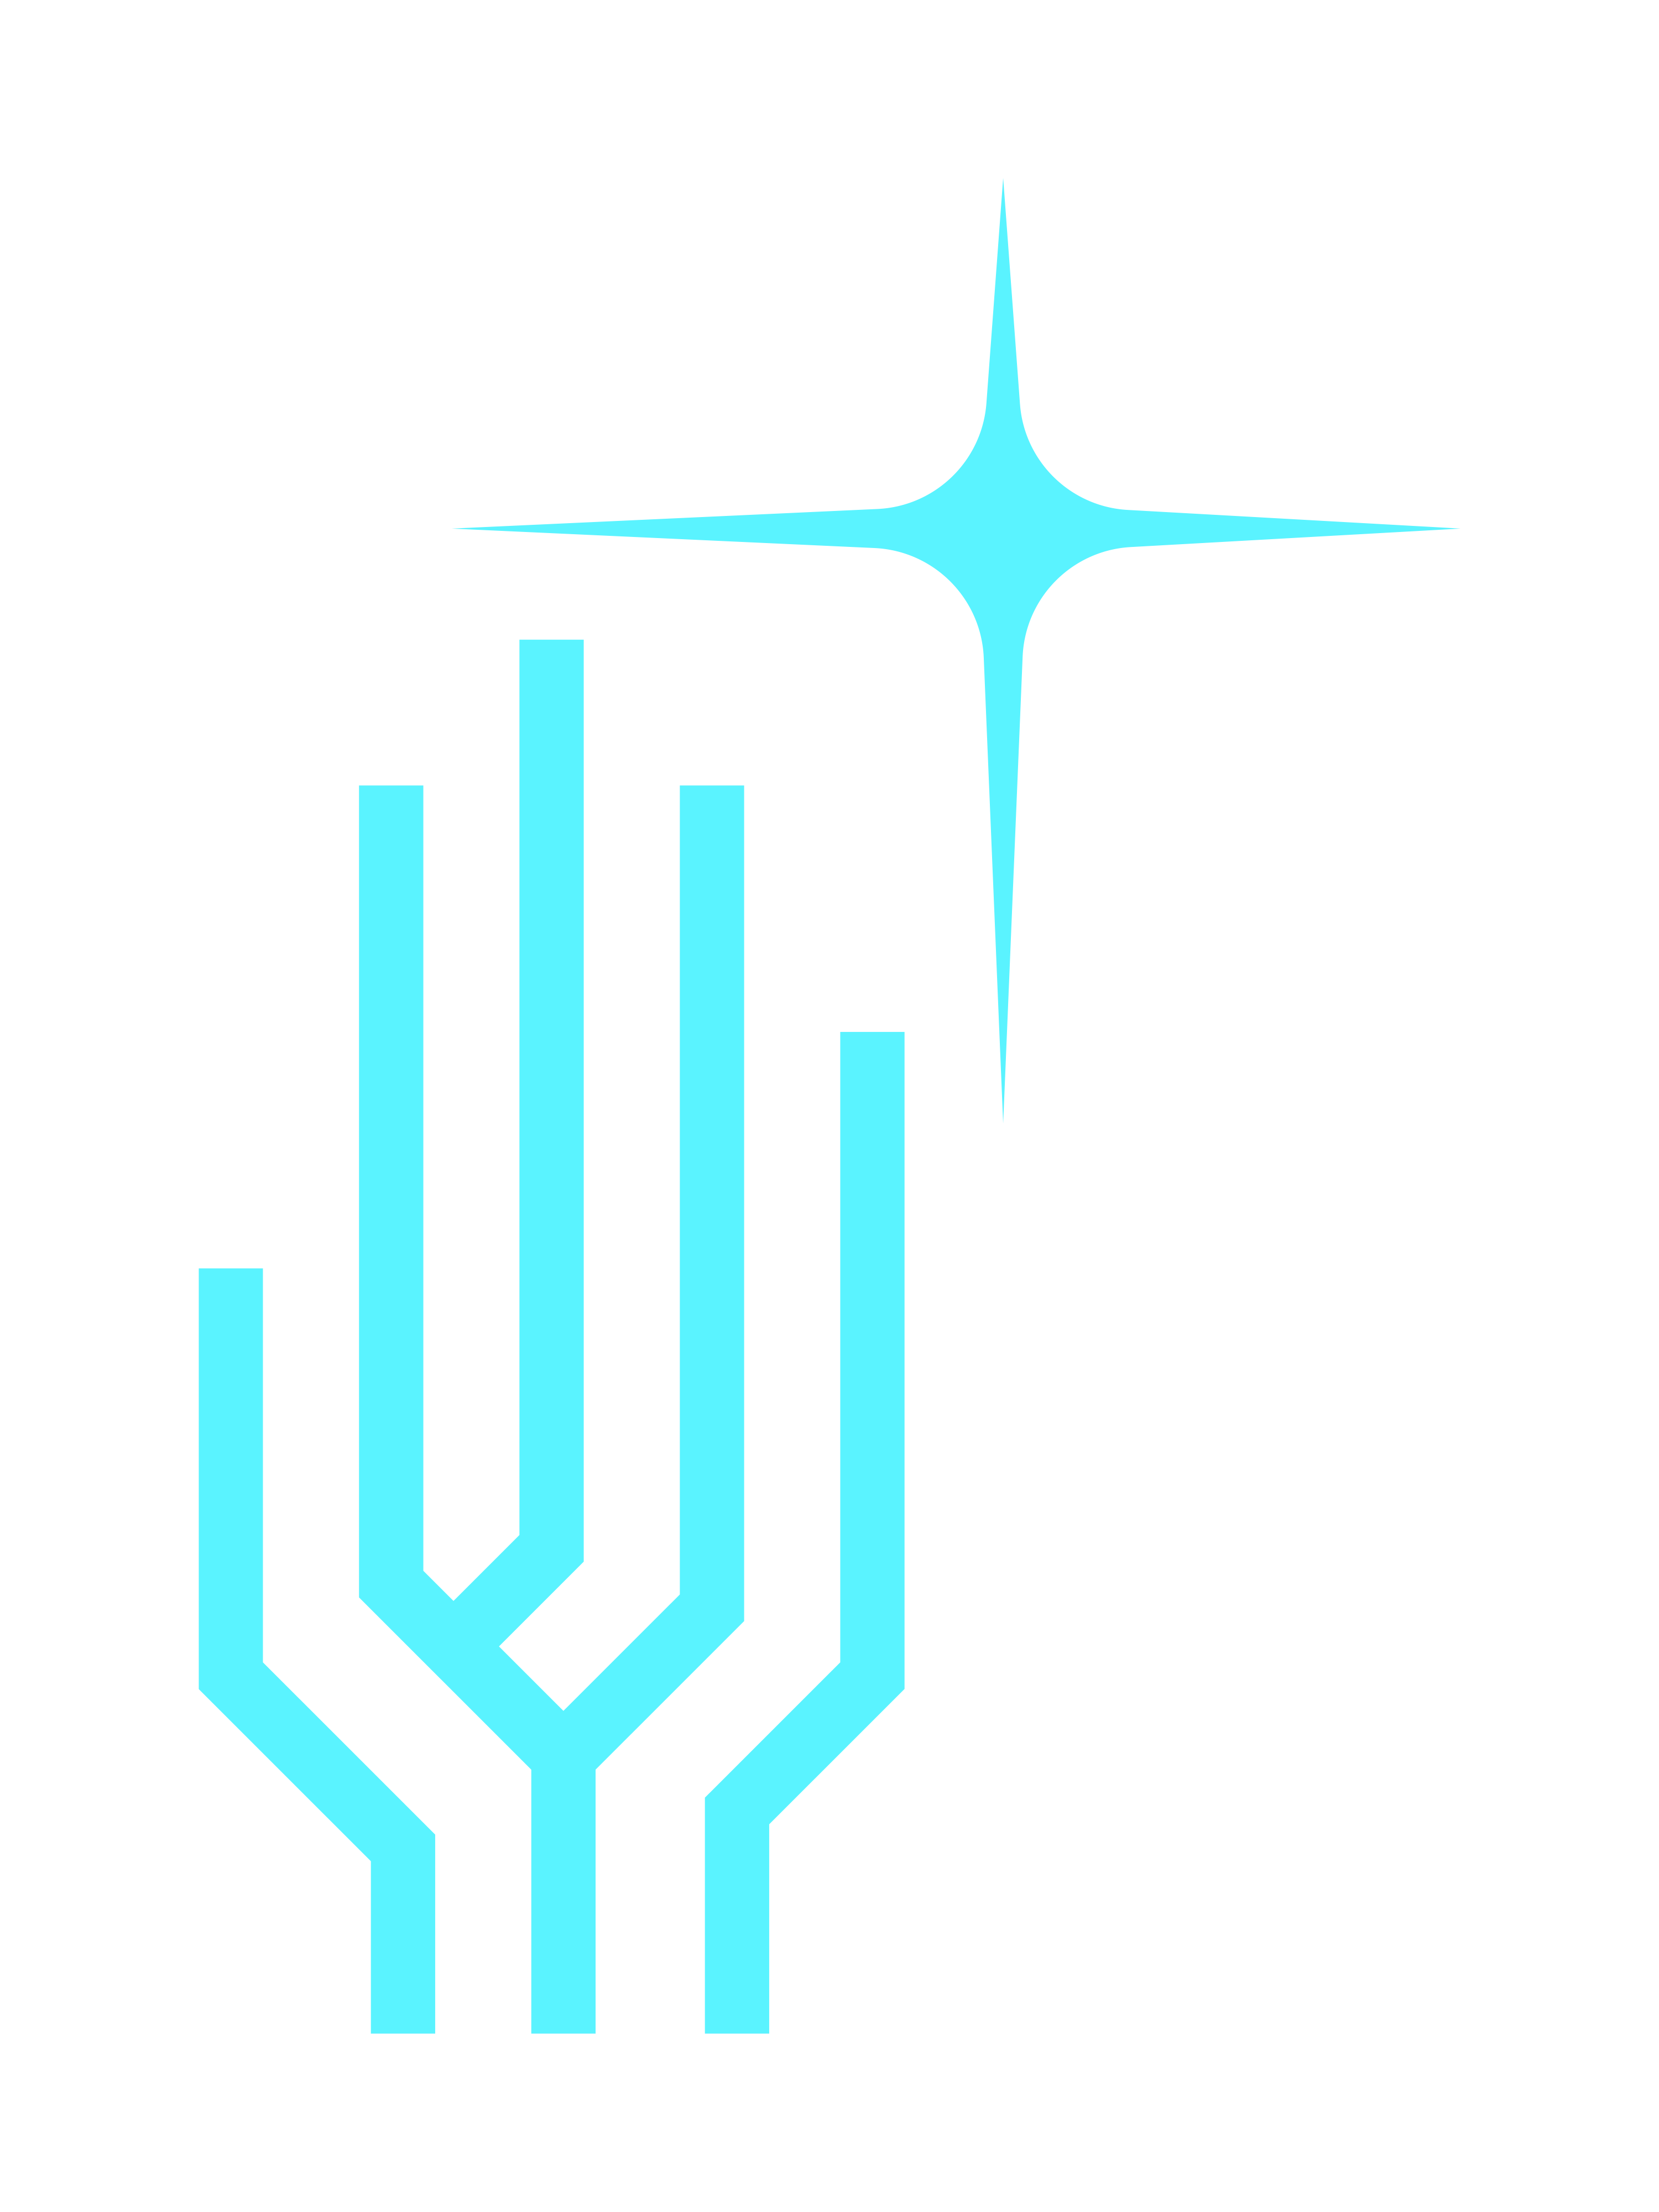 IGFR Corp